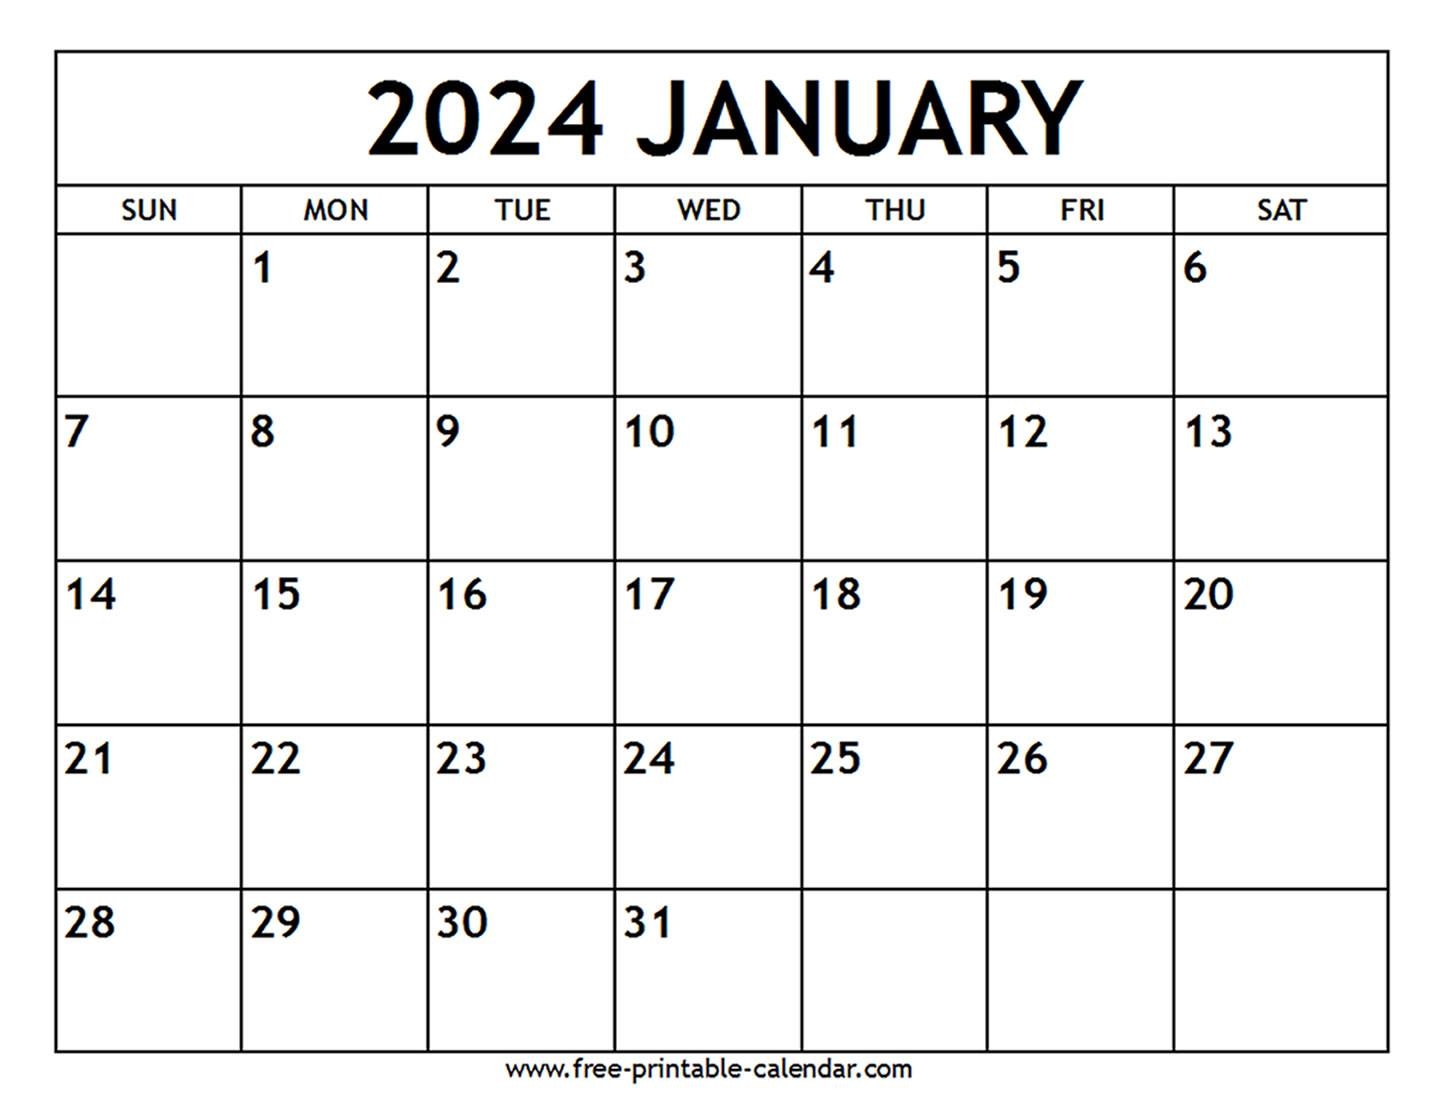 January 2024 Calendar - Free-Printable-Calendar pertaining to Free Printable Blank Calendar January 2024